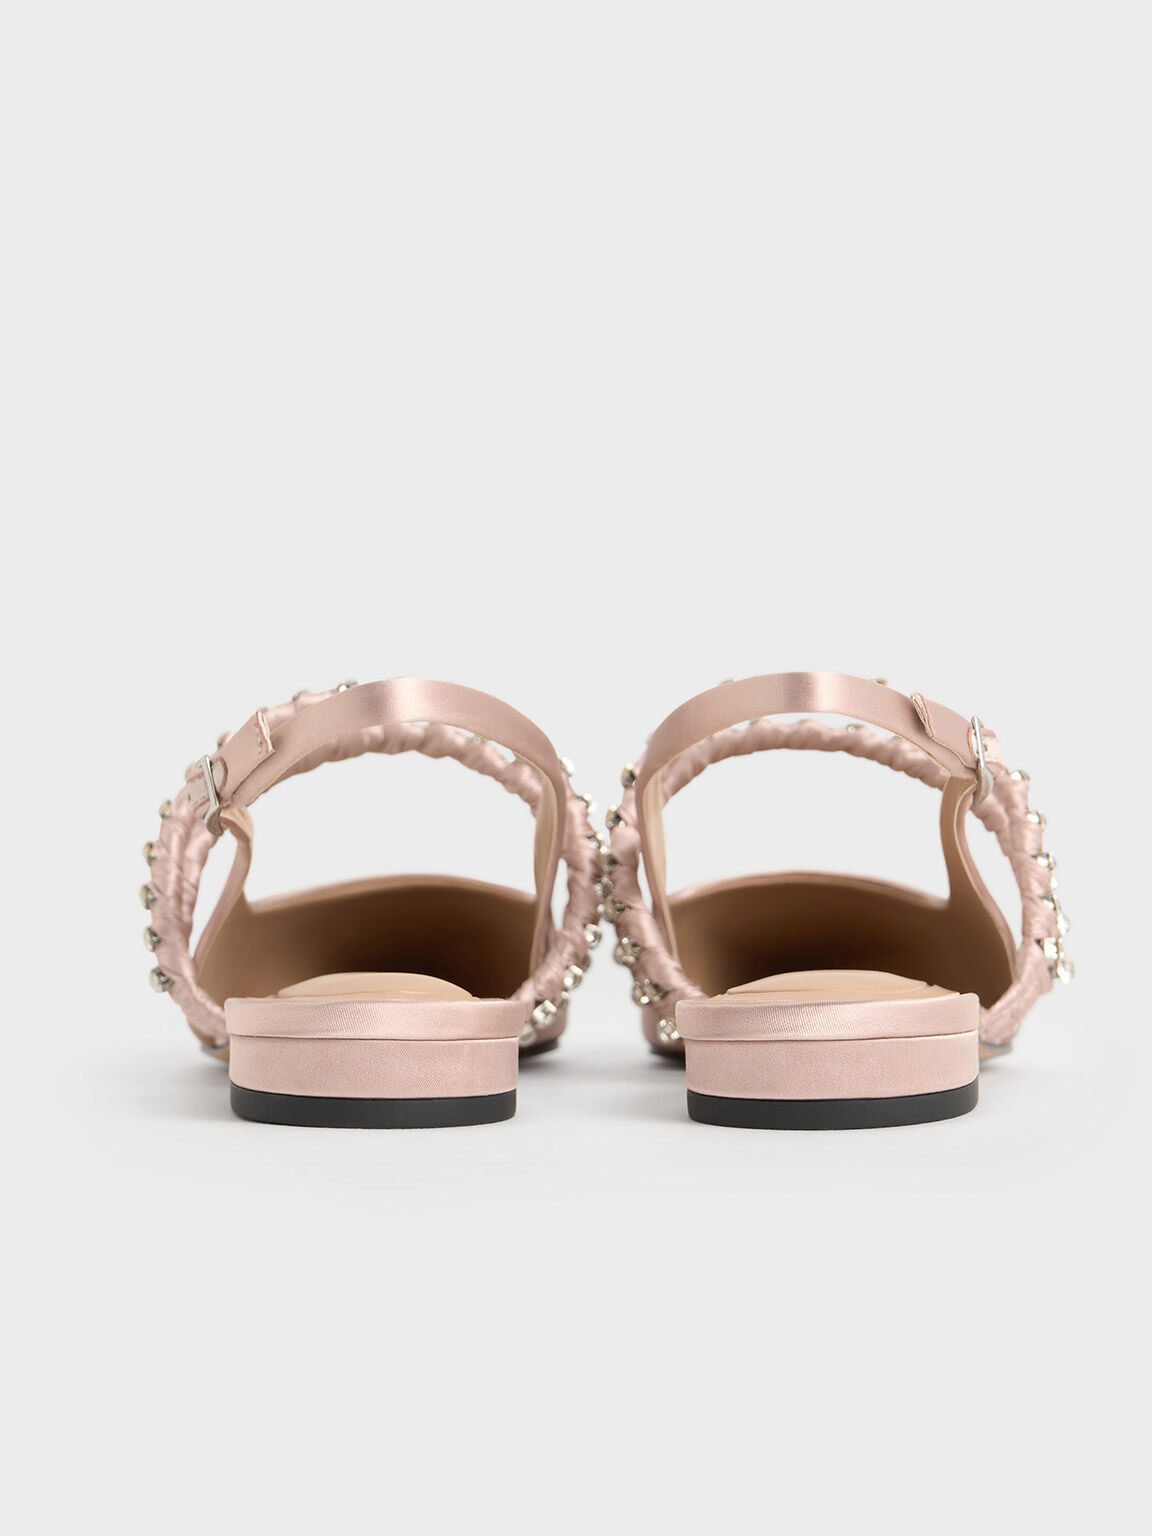 Goldie 水鑽雙帶尖頭鞋, 淺粉色, hi-res